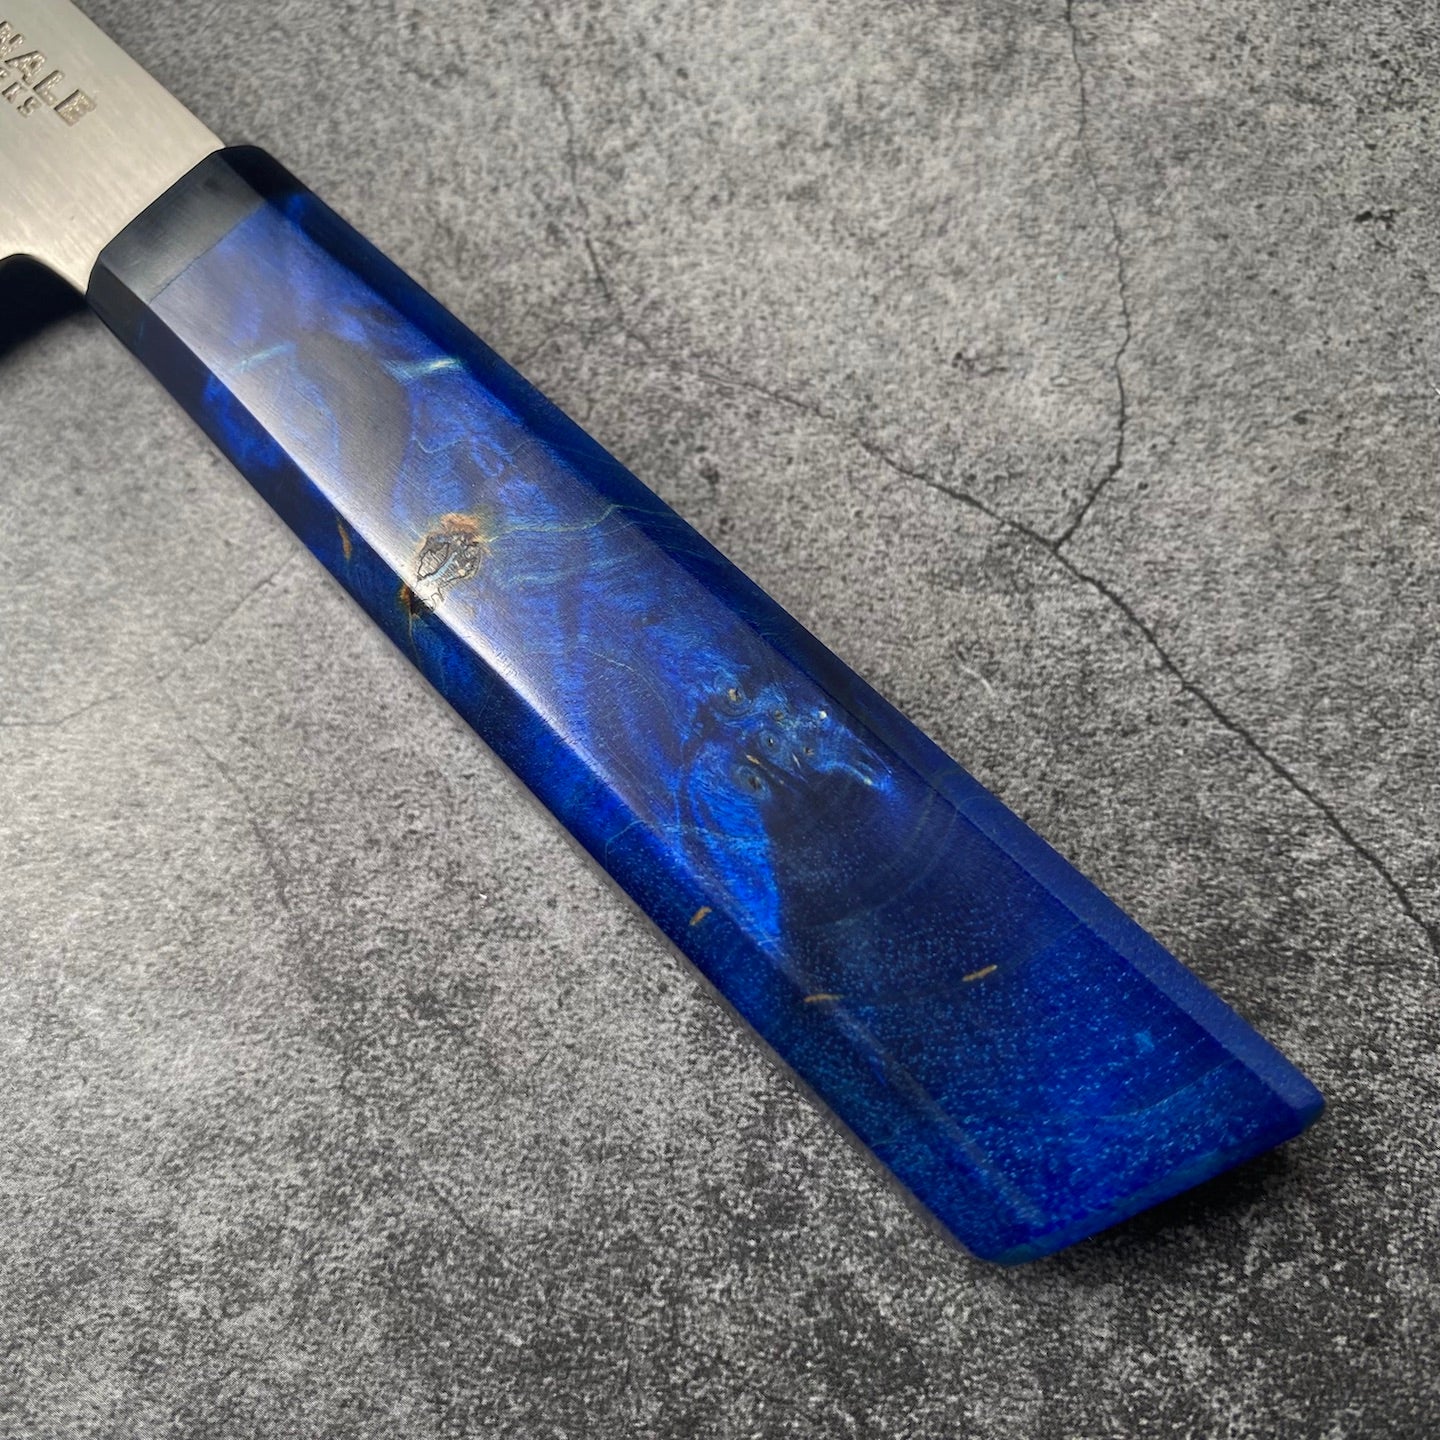 180mm Bunka. Sandvik 14c28n Stainless. Blue Stabilized Dyed Maple. Pakka Ferrule